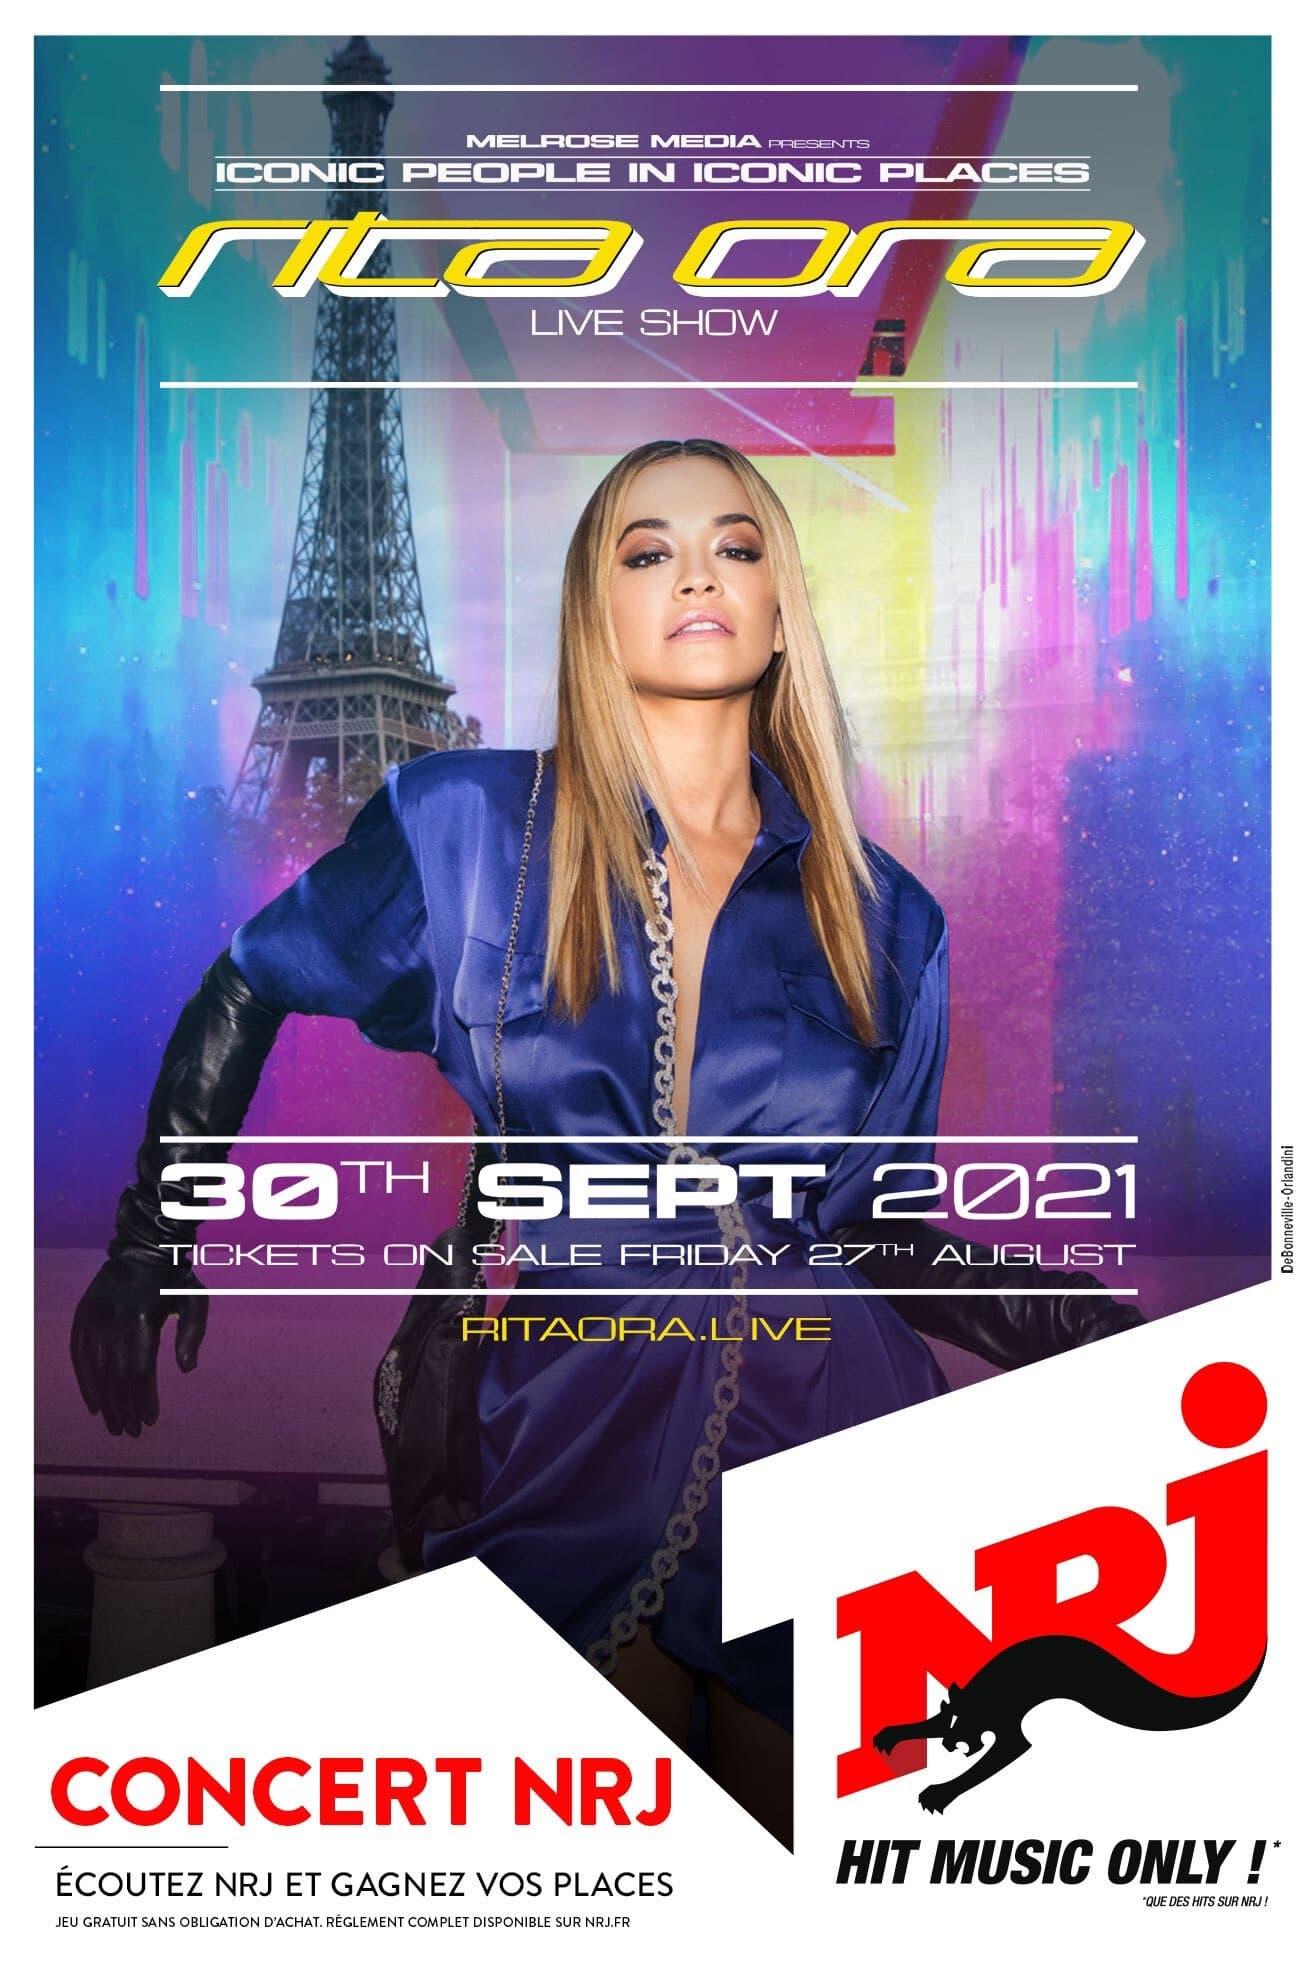 Rita Ora at the Eiffel Tower poster